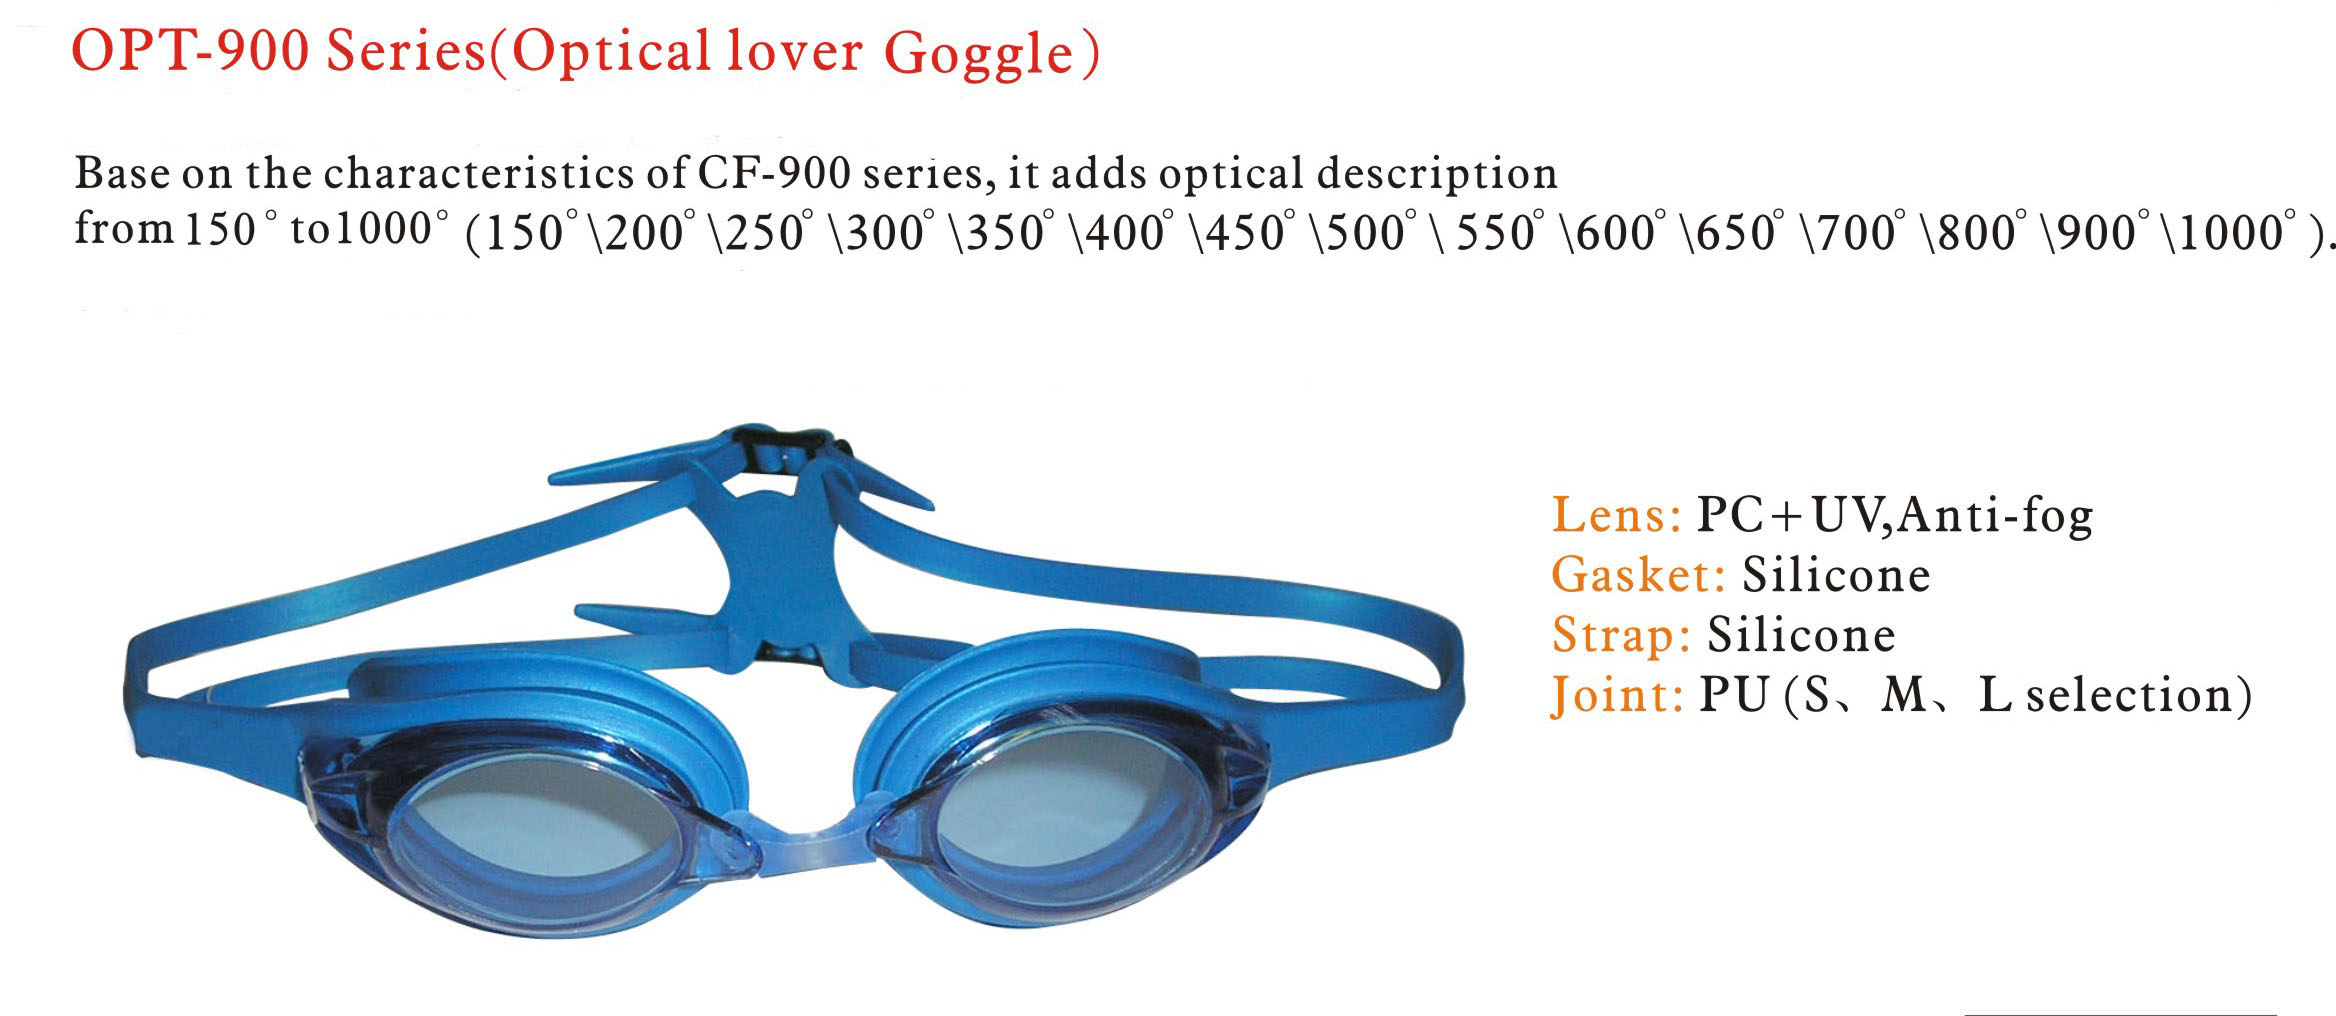 Optical lover Goggle